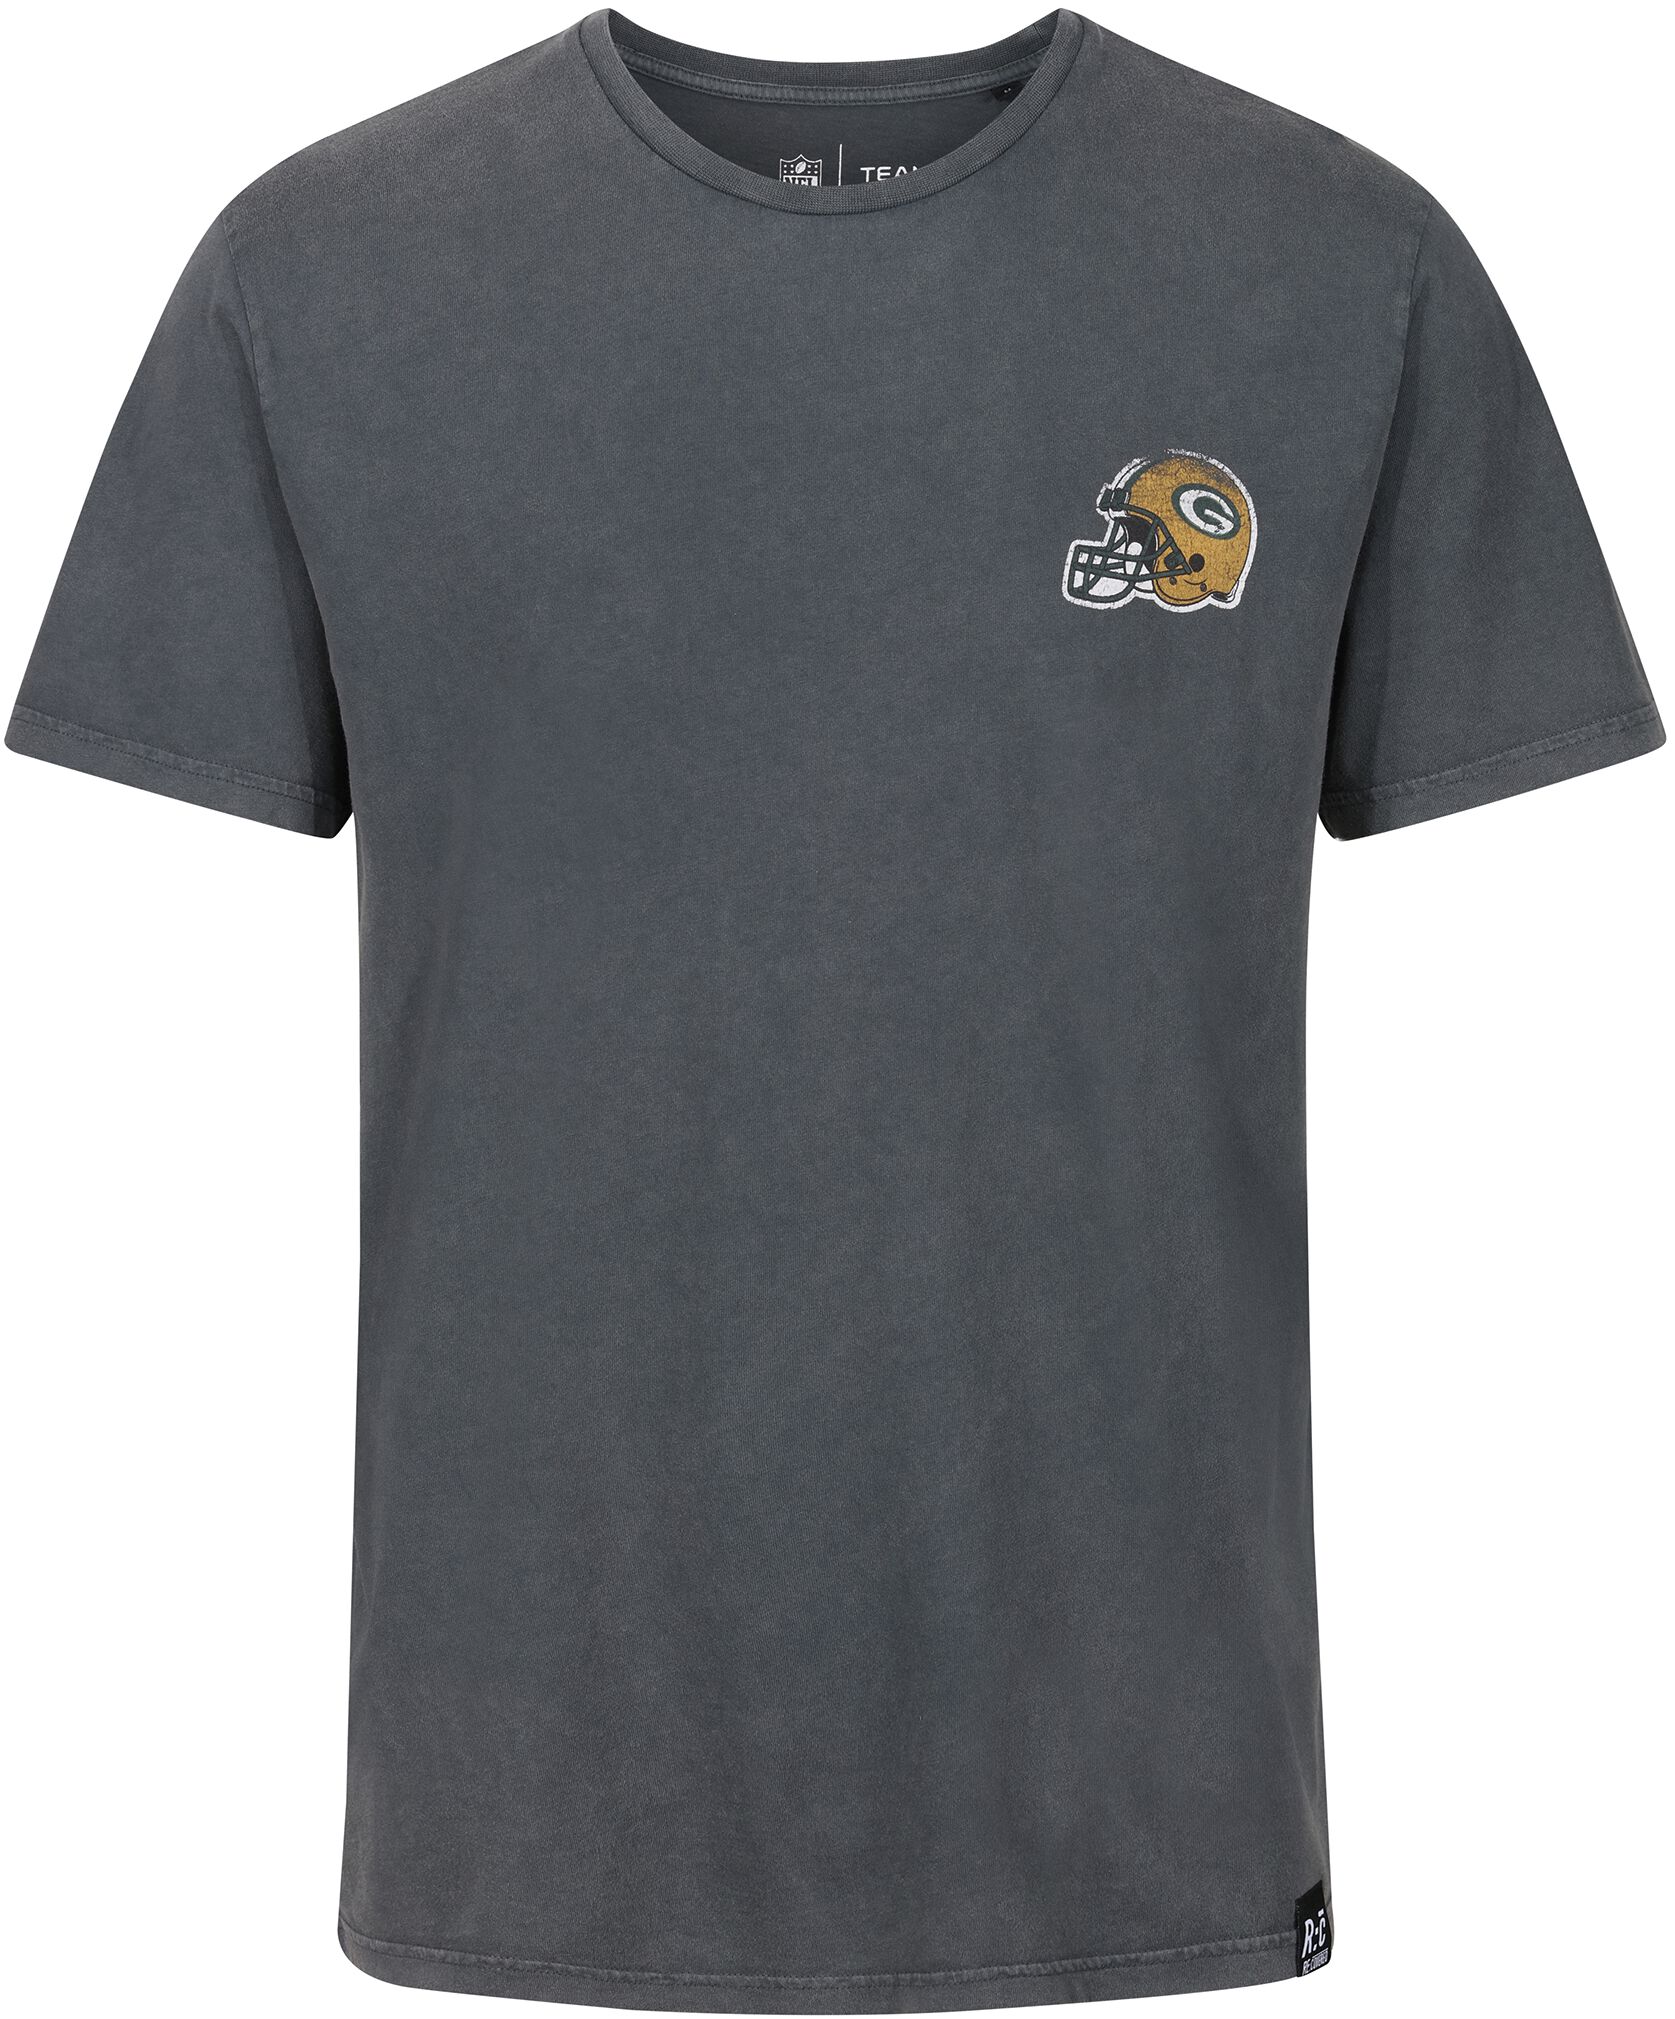 Recovered Clothing T-Shirt - NFL Packers College Black Washed - S bis XXL - für Männer - Größe S - multicolor